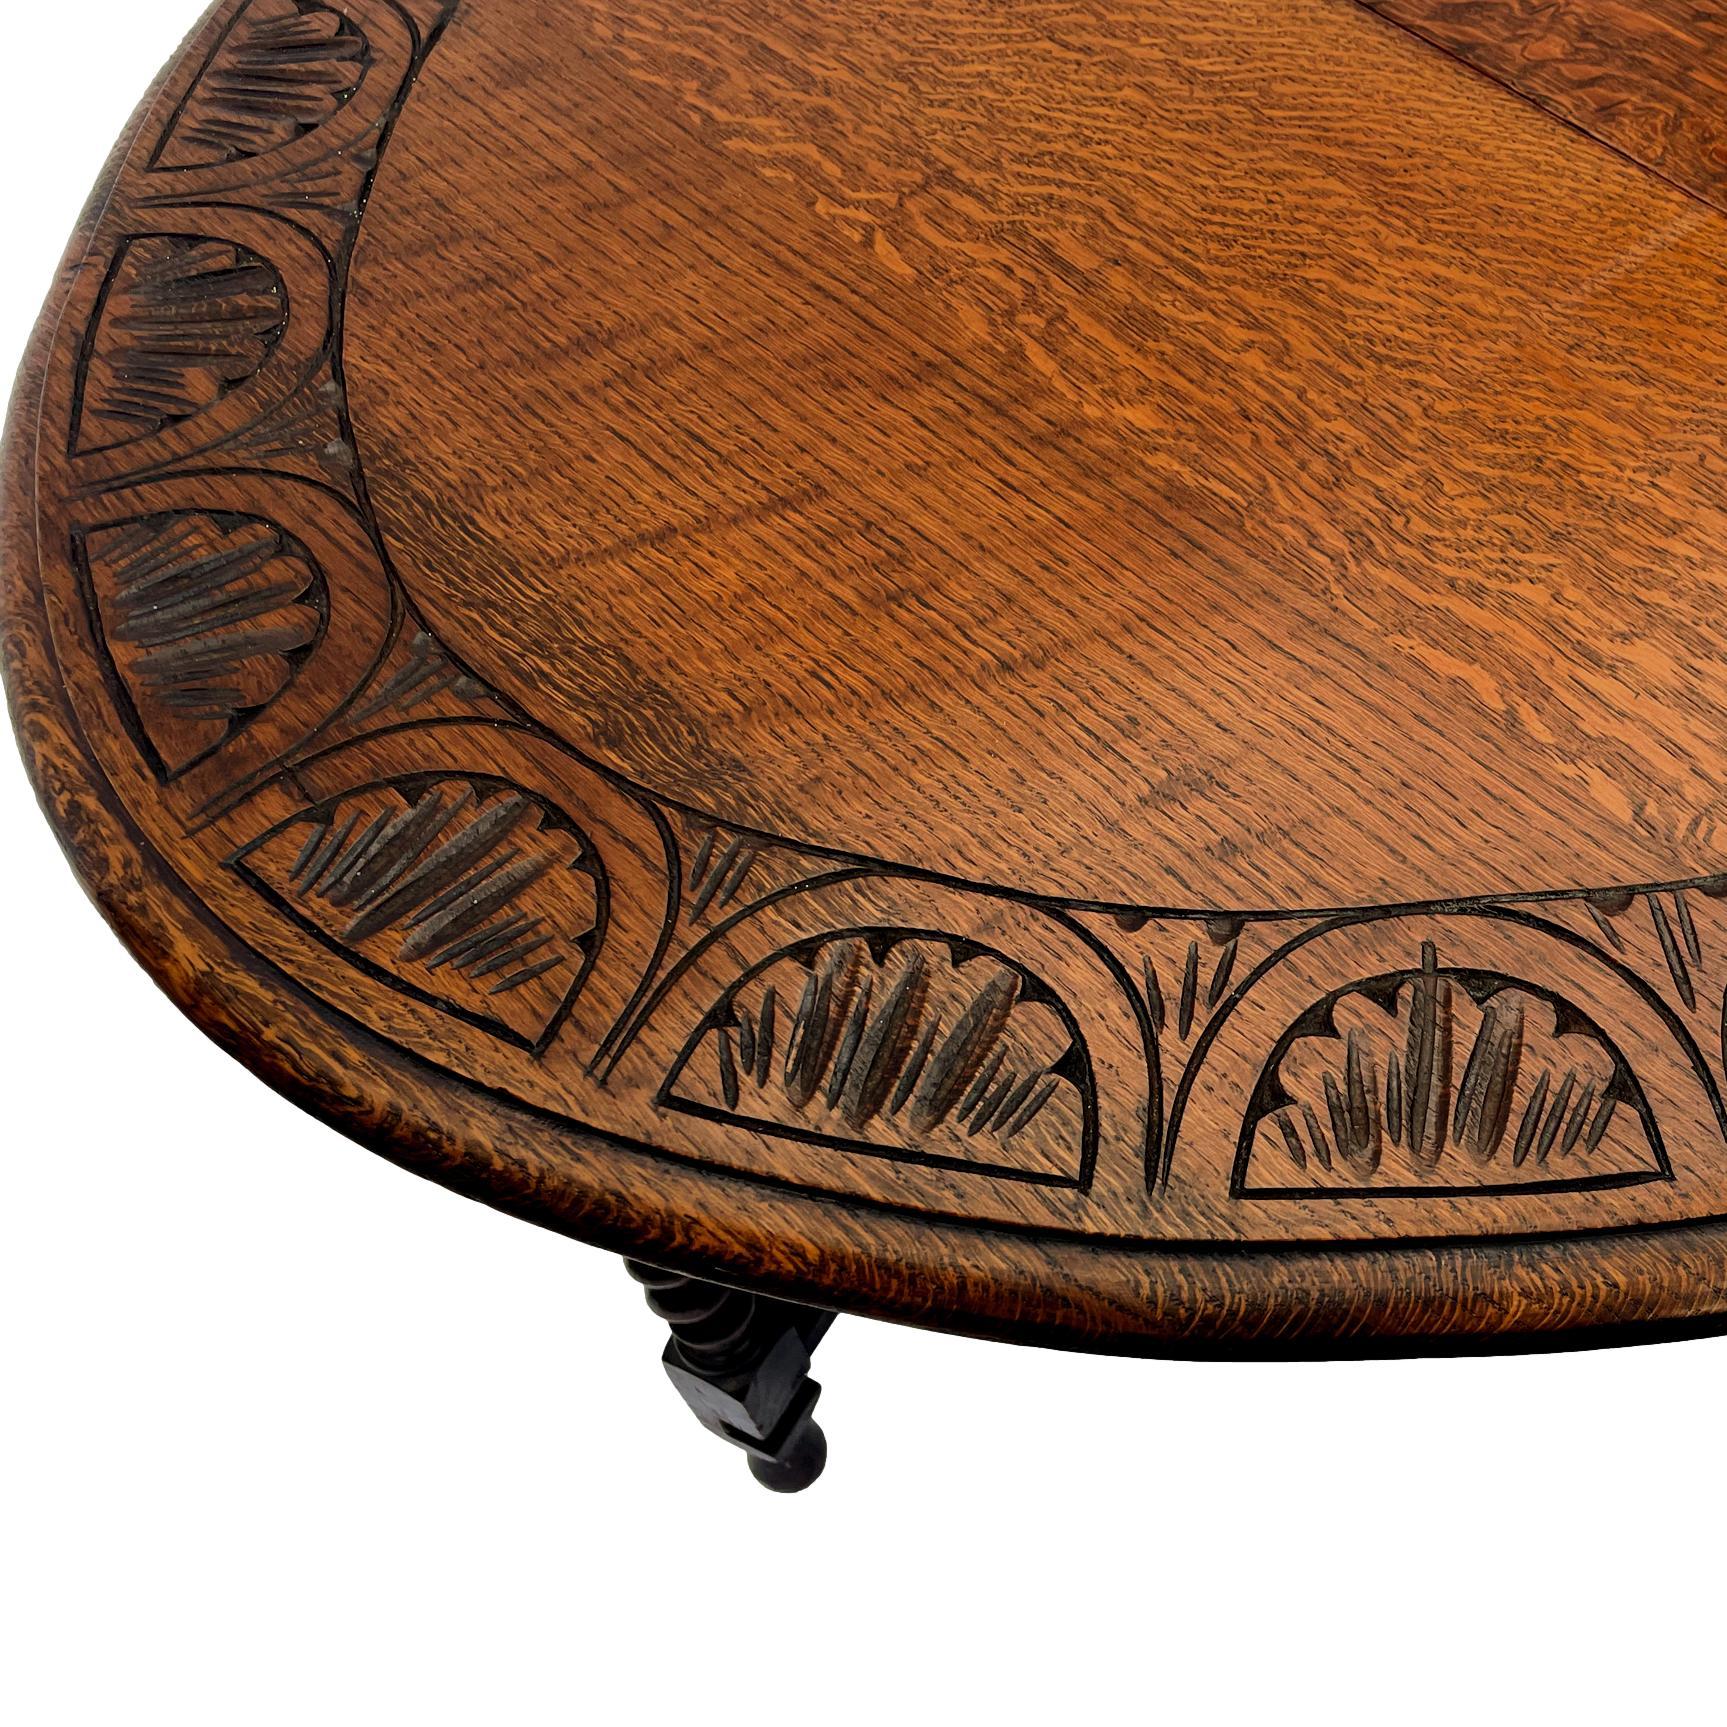 Oak Barley Twist Drop-Leaf Table with a Carved Top, English, circa 1920 1